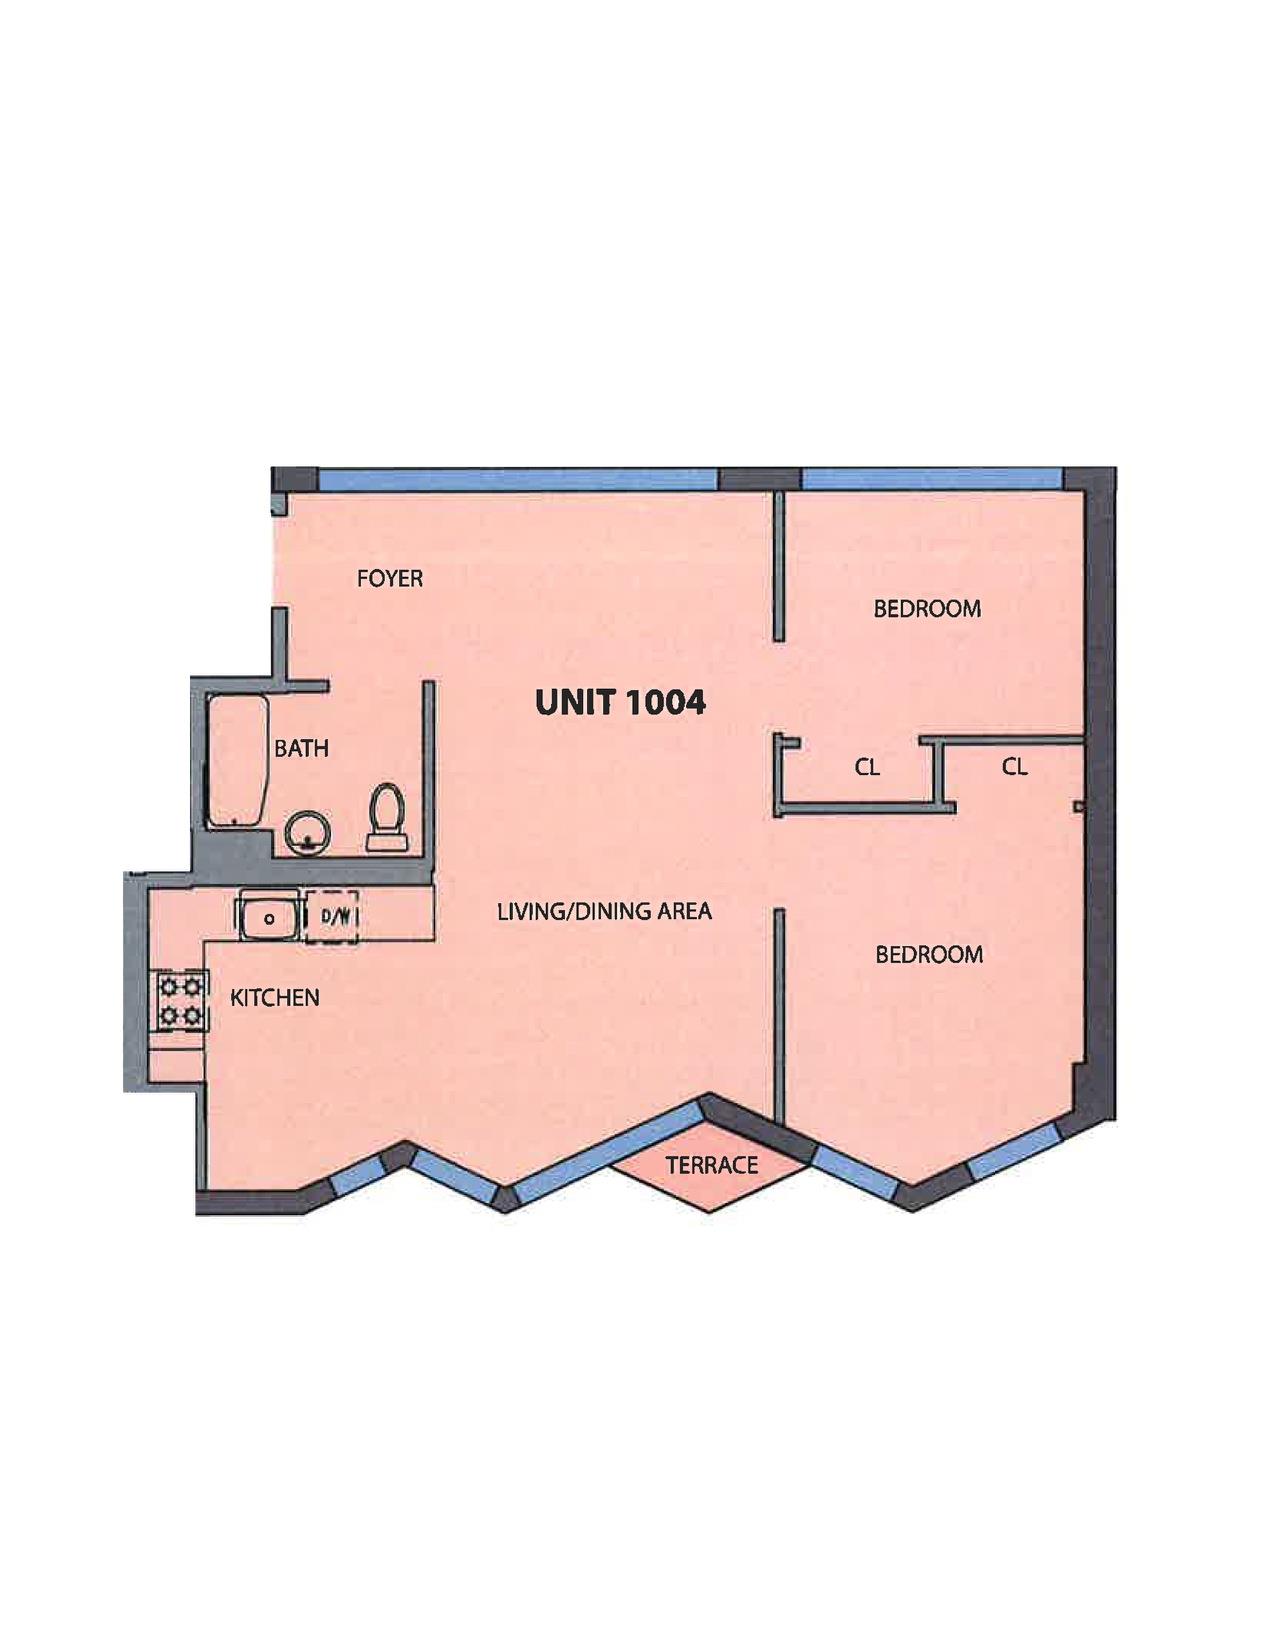 Floorplan for 2183 3rd Avenue, 1004